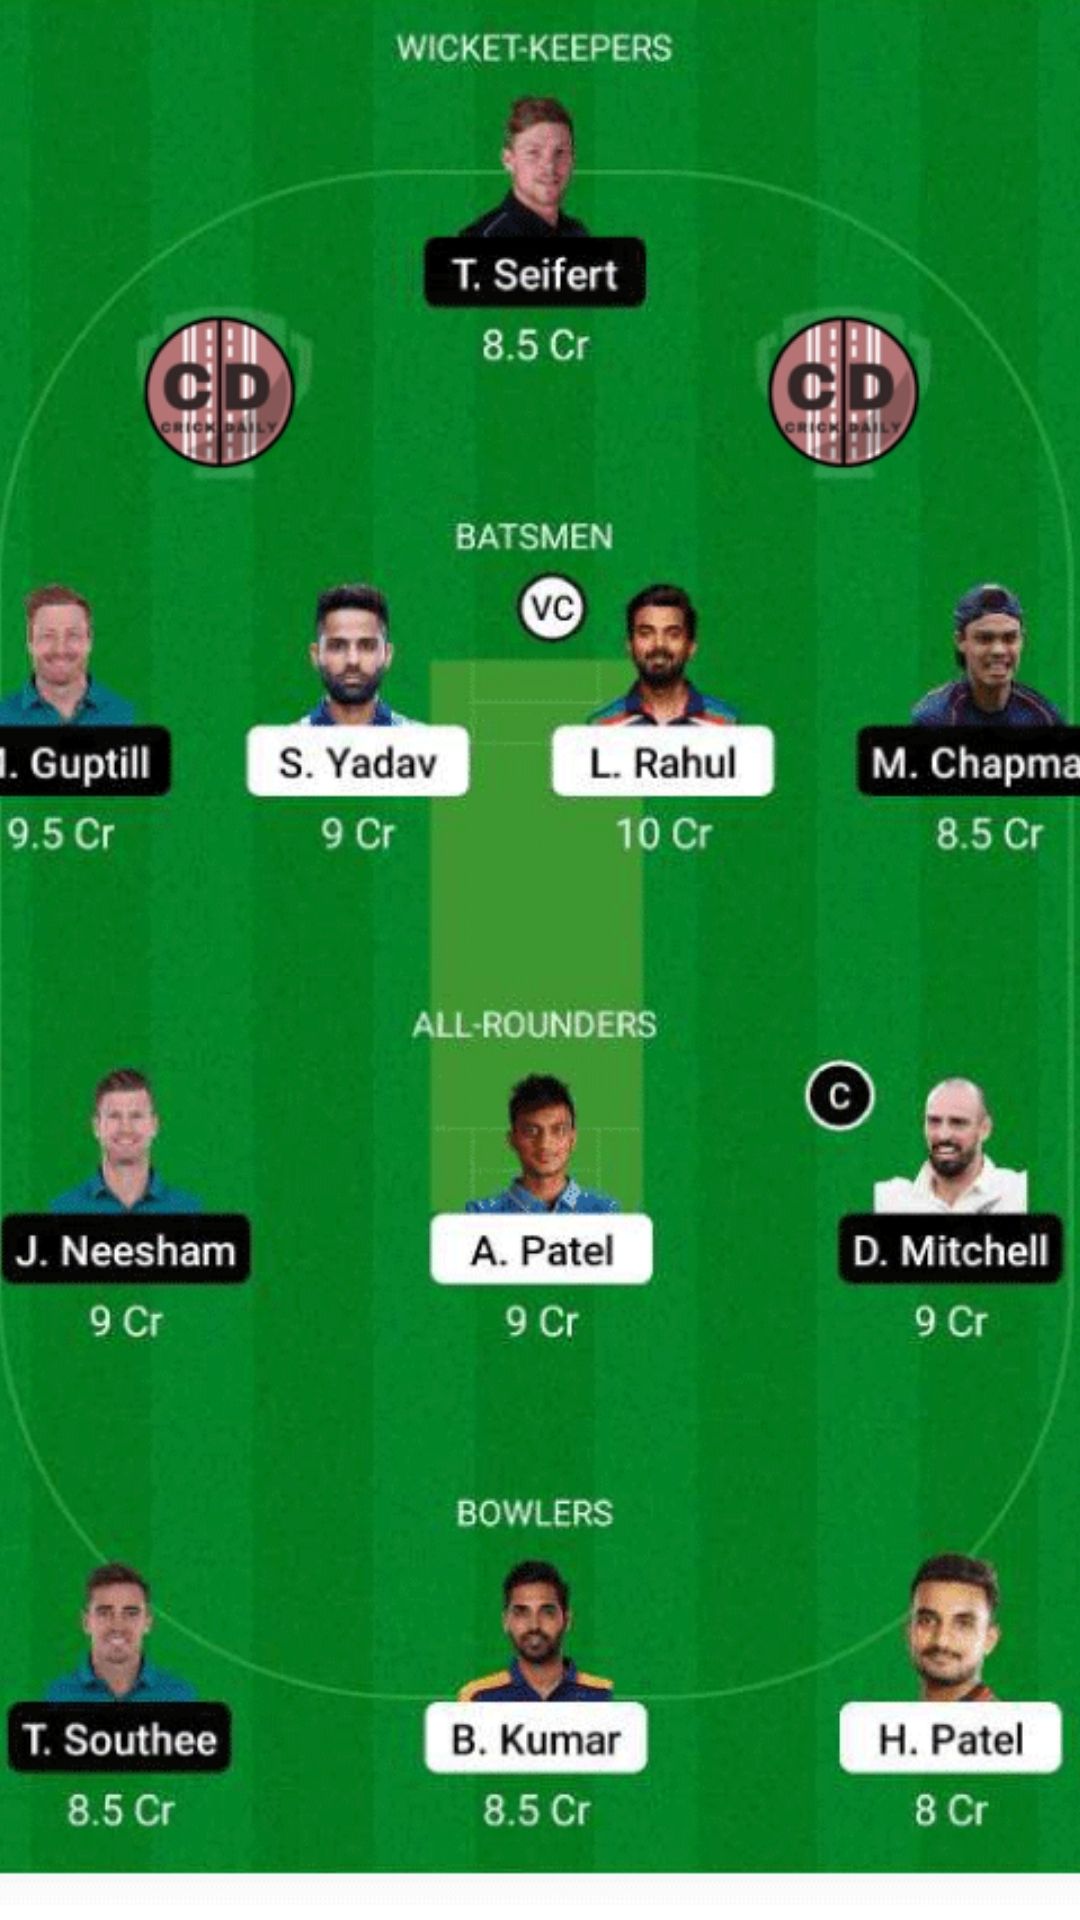 भारत बनाम न्यूजीलैंड तीसरा टी20 ड्रीम 11 भविष्यवाणी टीम